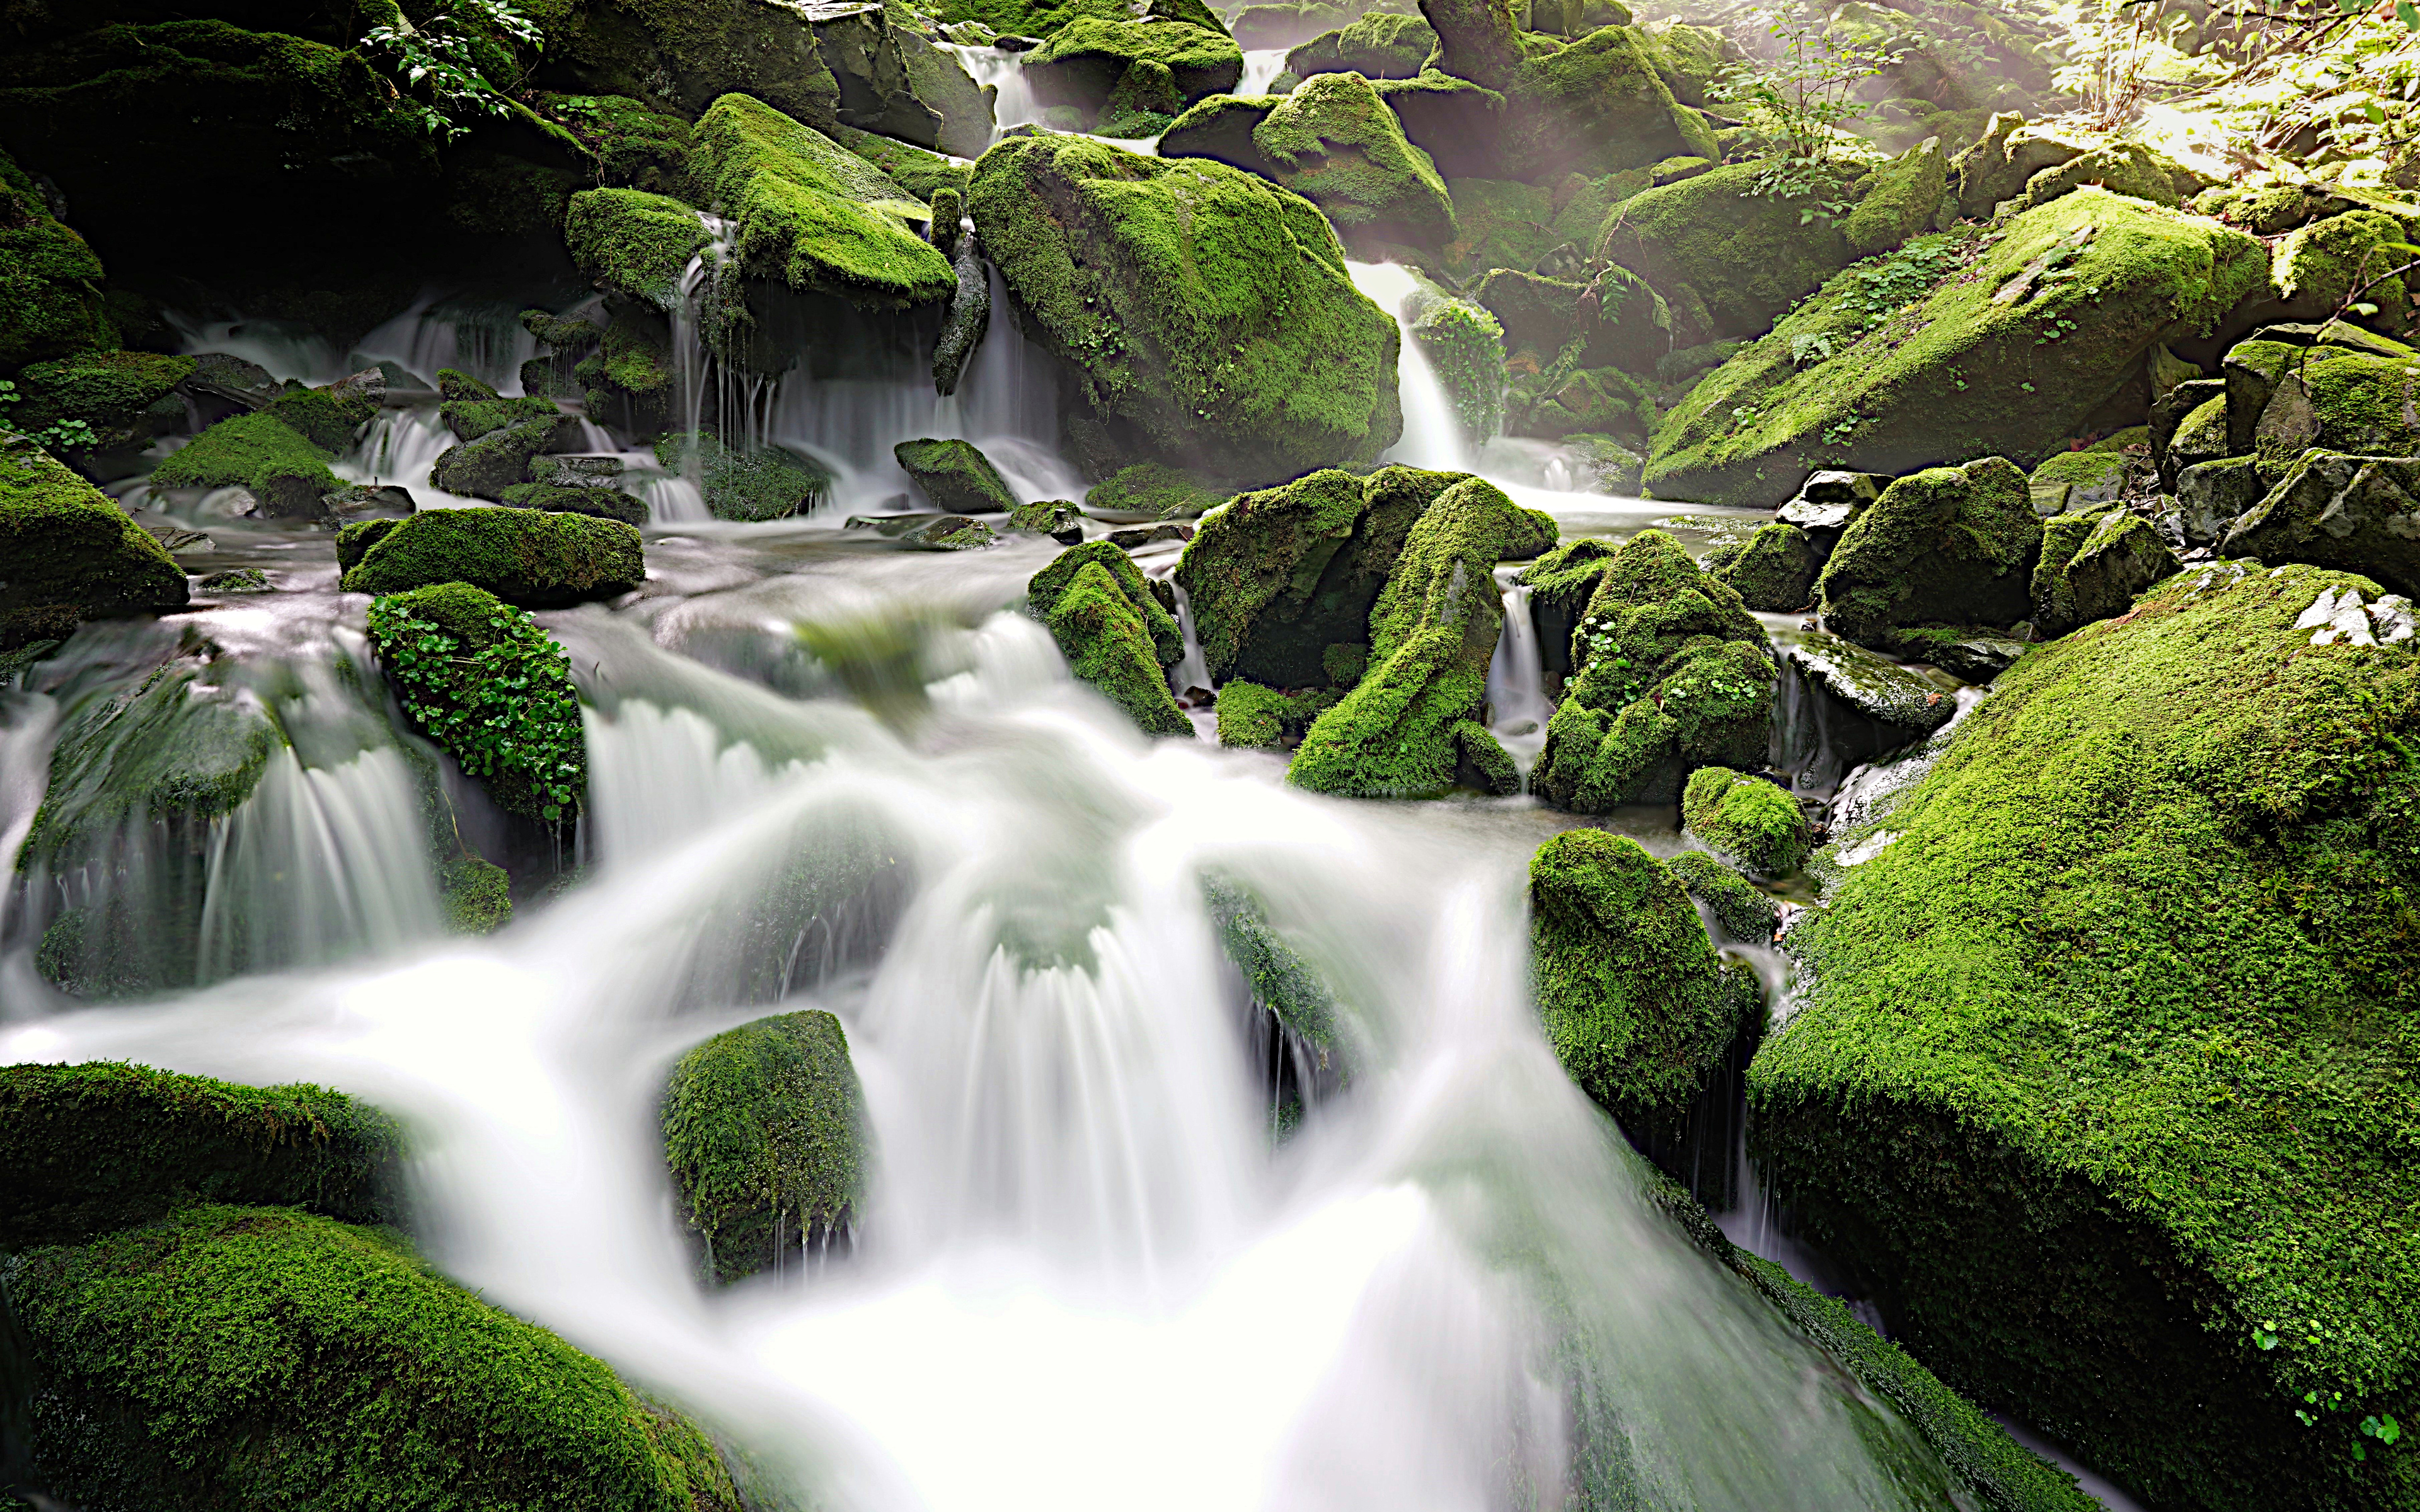 Rushing Waterfalls in the Korean Mountains by Jaesung An